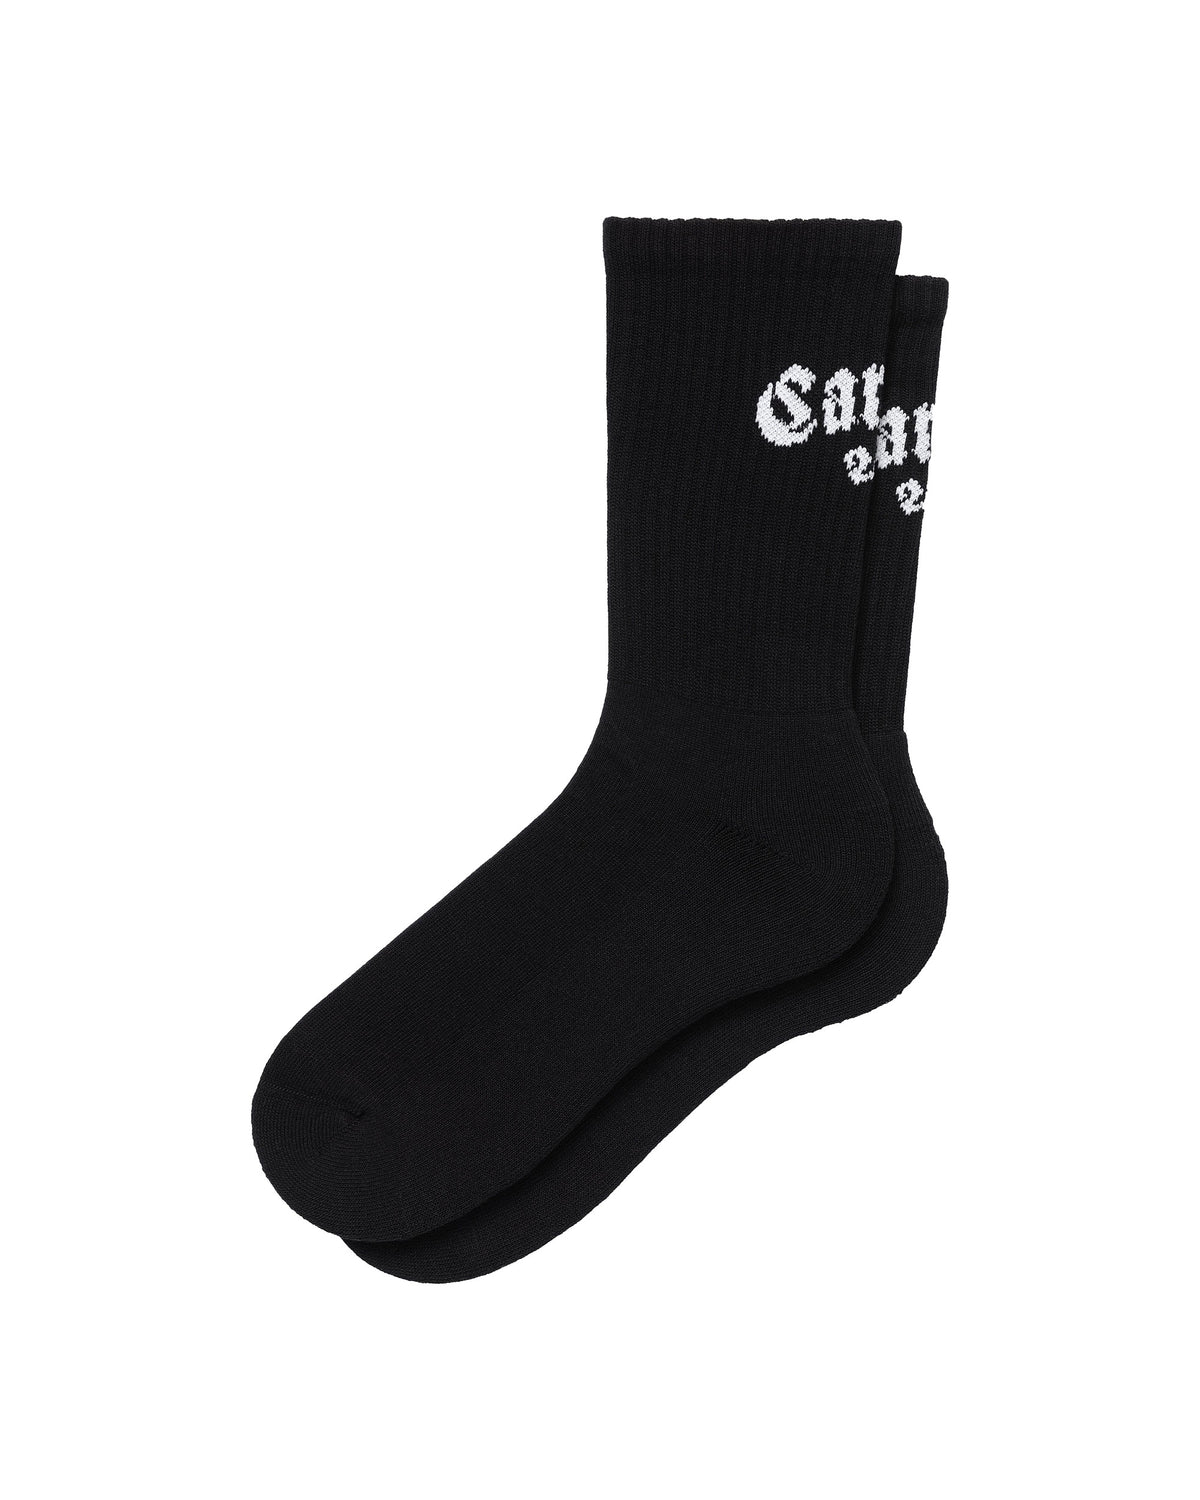 Carhartt Wip Onyx Socks Black